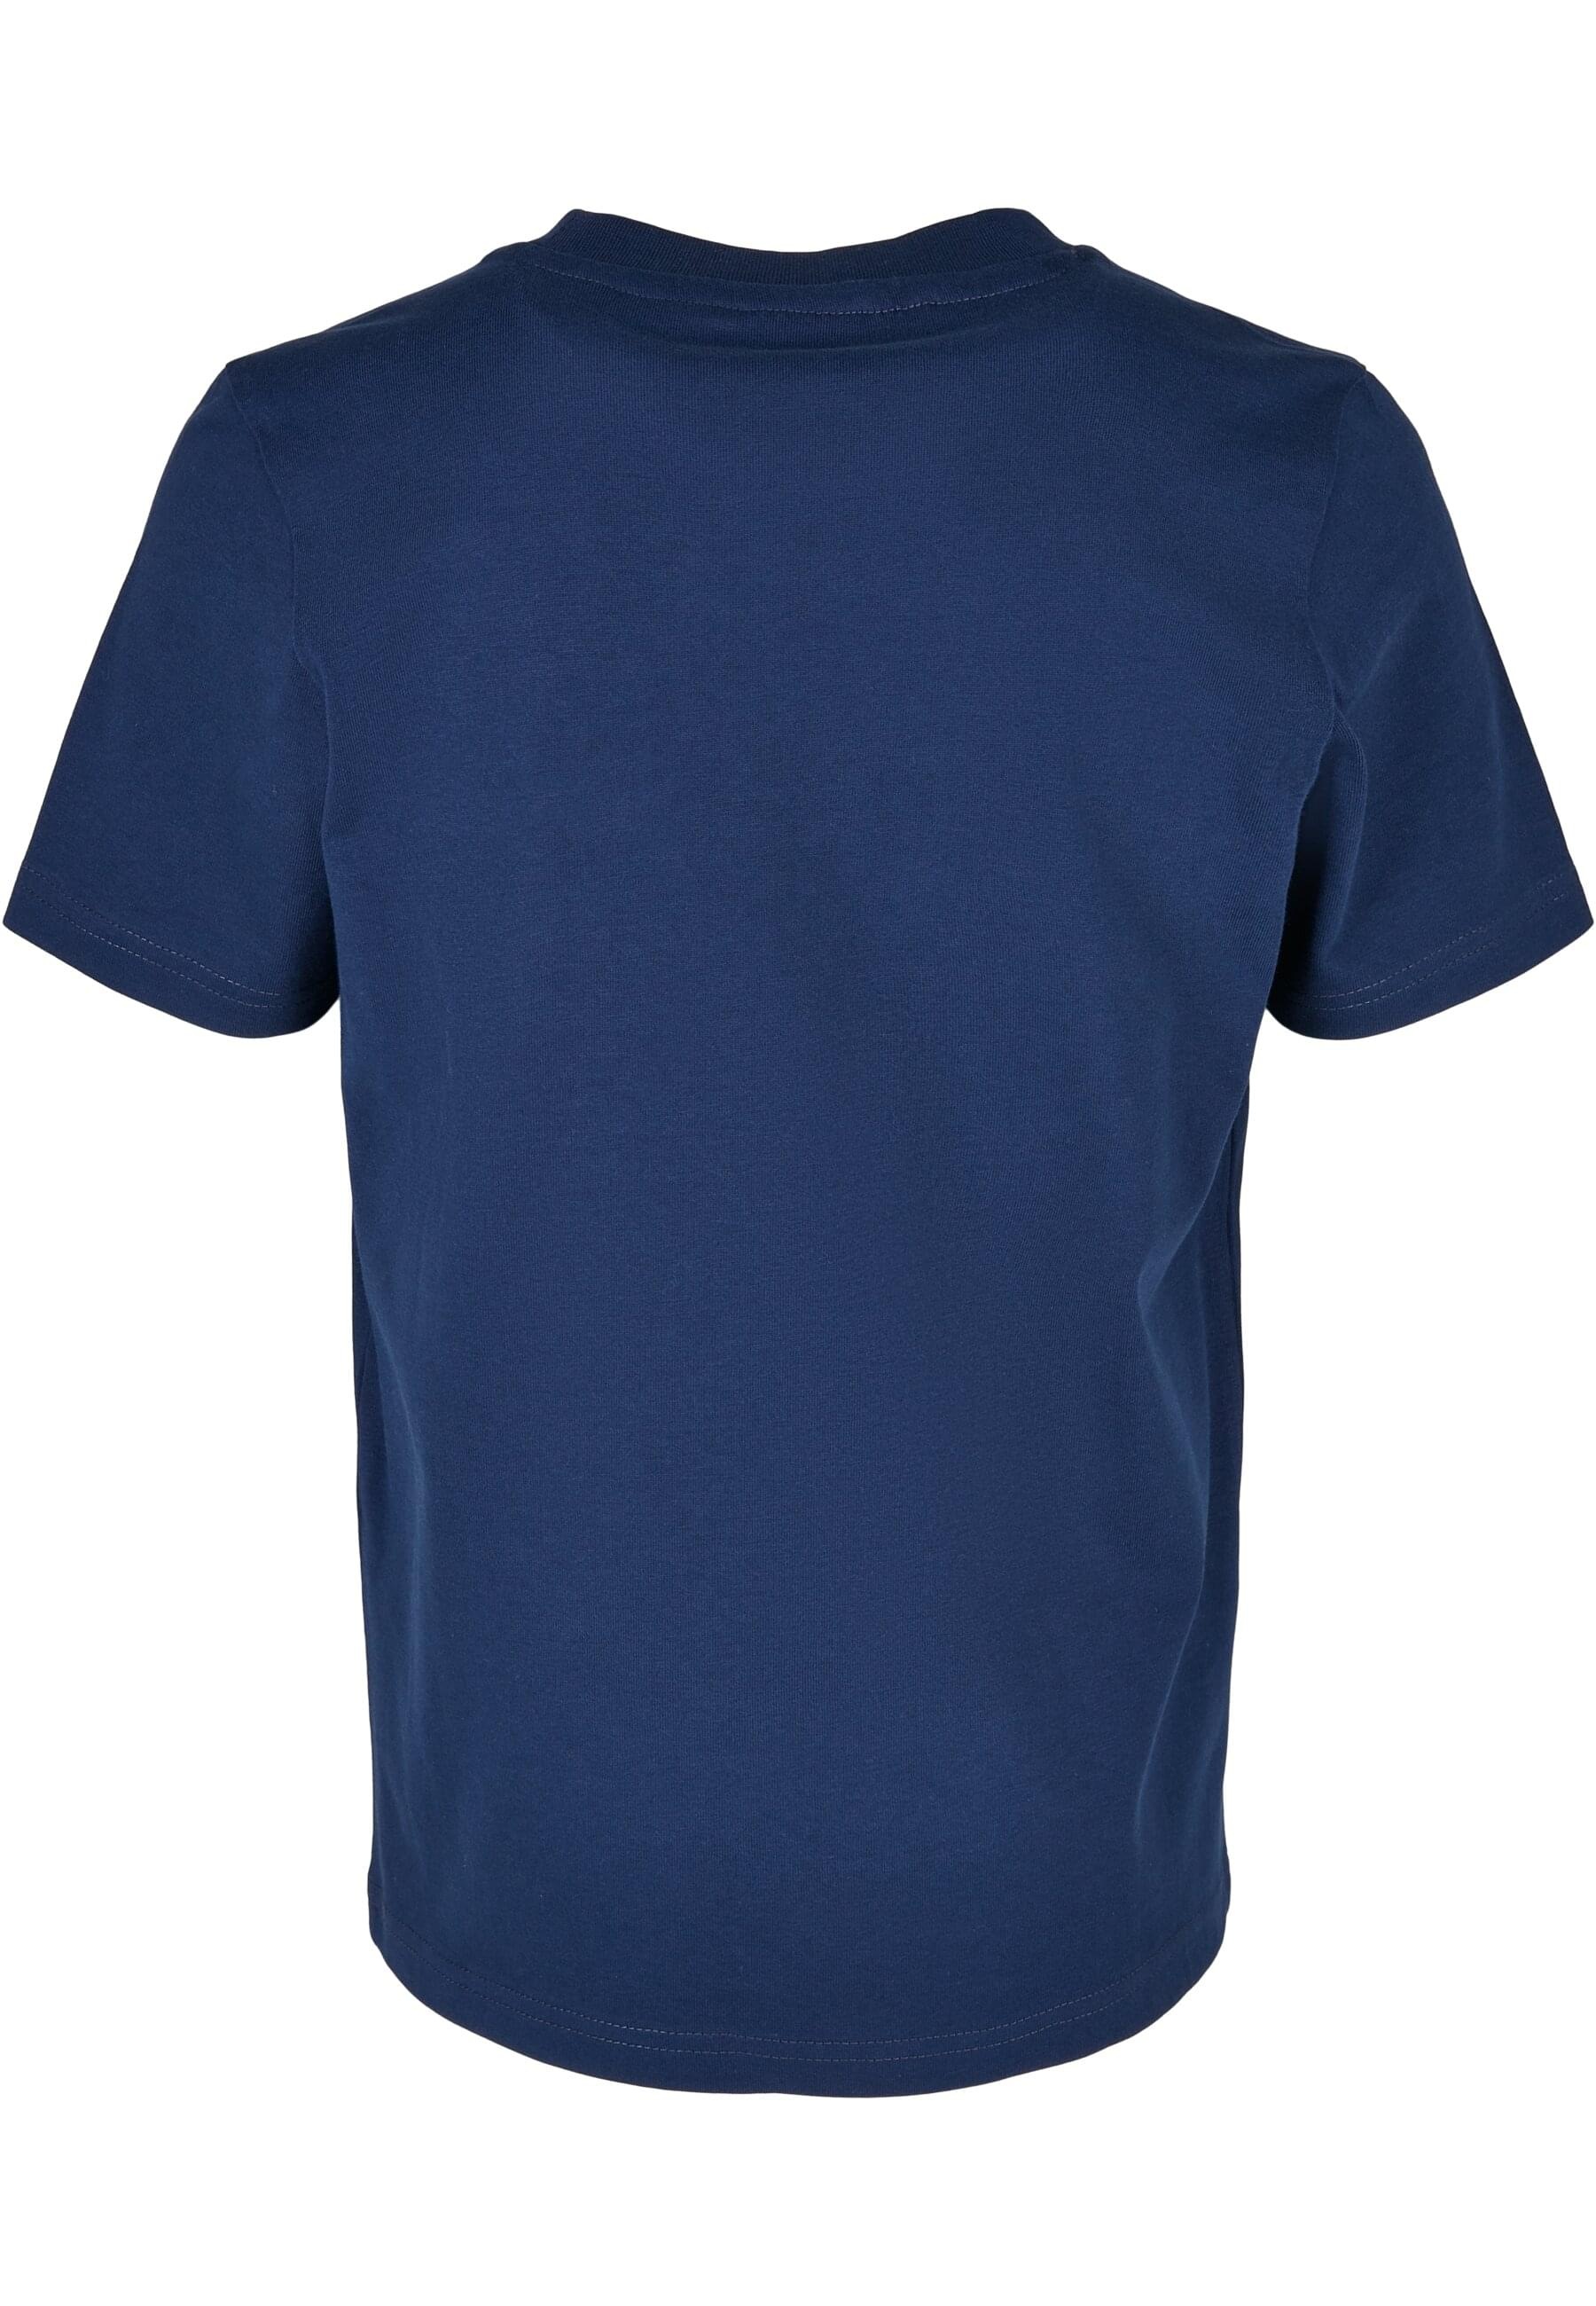 URBAN CLASSICS T-Shirt »Urban Classics Herren«, (1 tlg.)